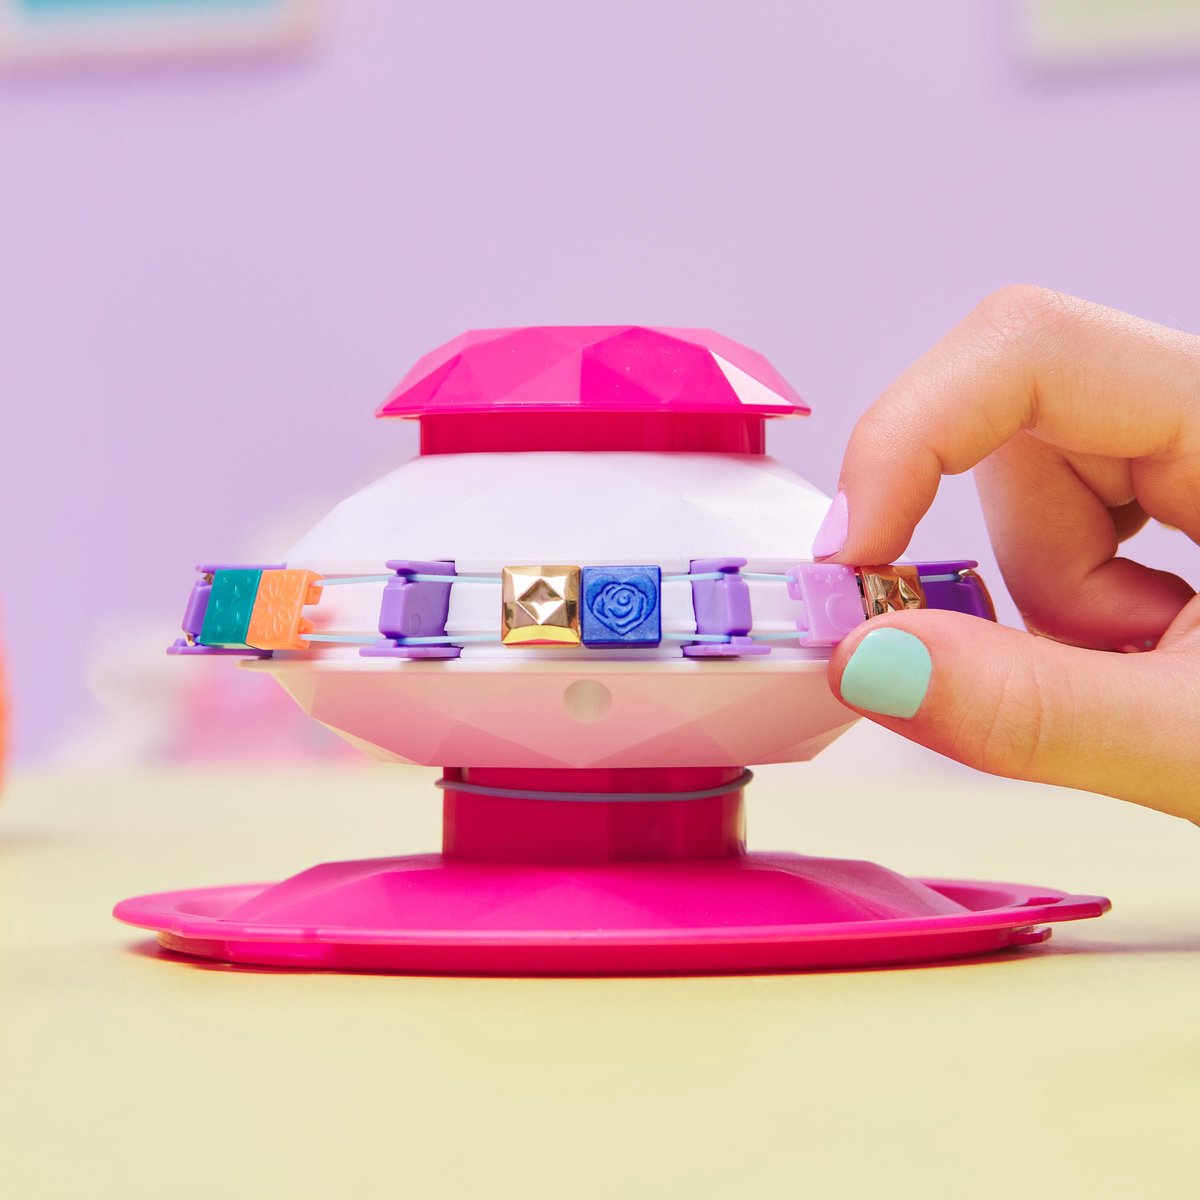 Cool Maker - PopStyle Bracelet Maker - Online Toys Australia